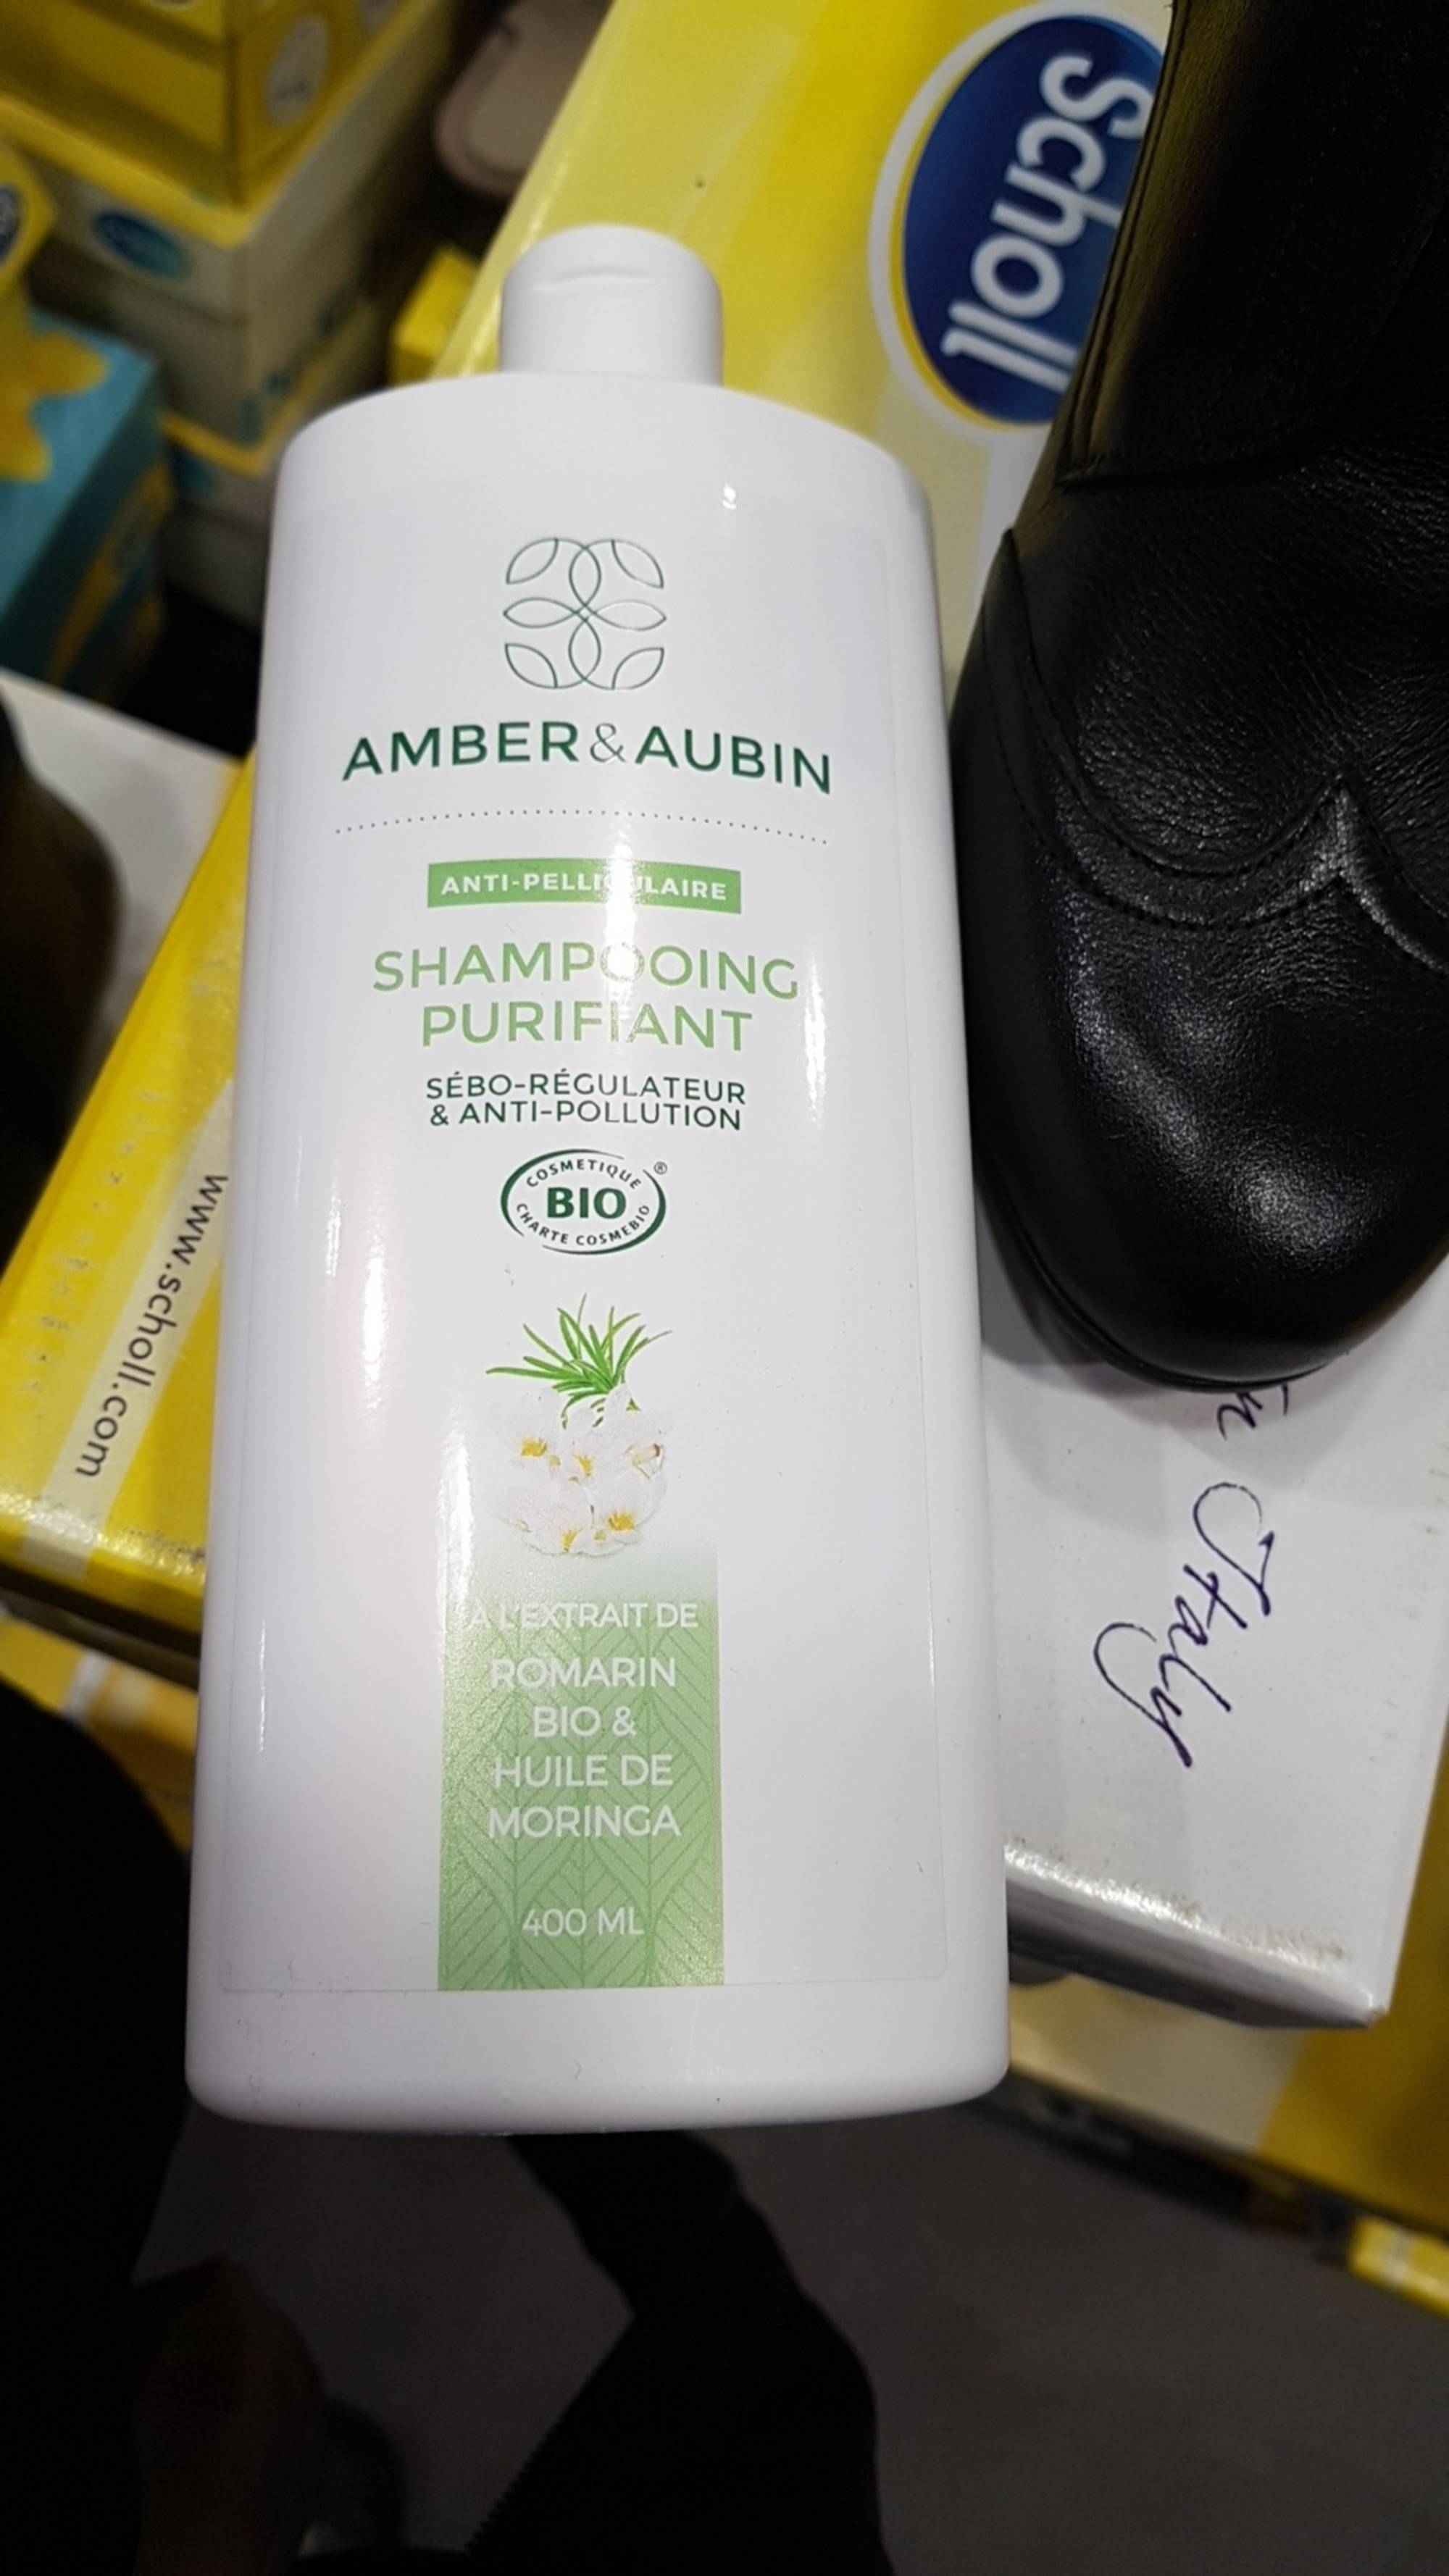 AMBER & AUBIN - Shampooing purifiant bio